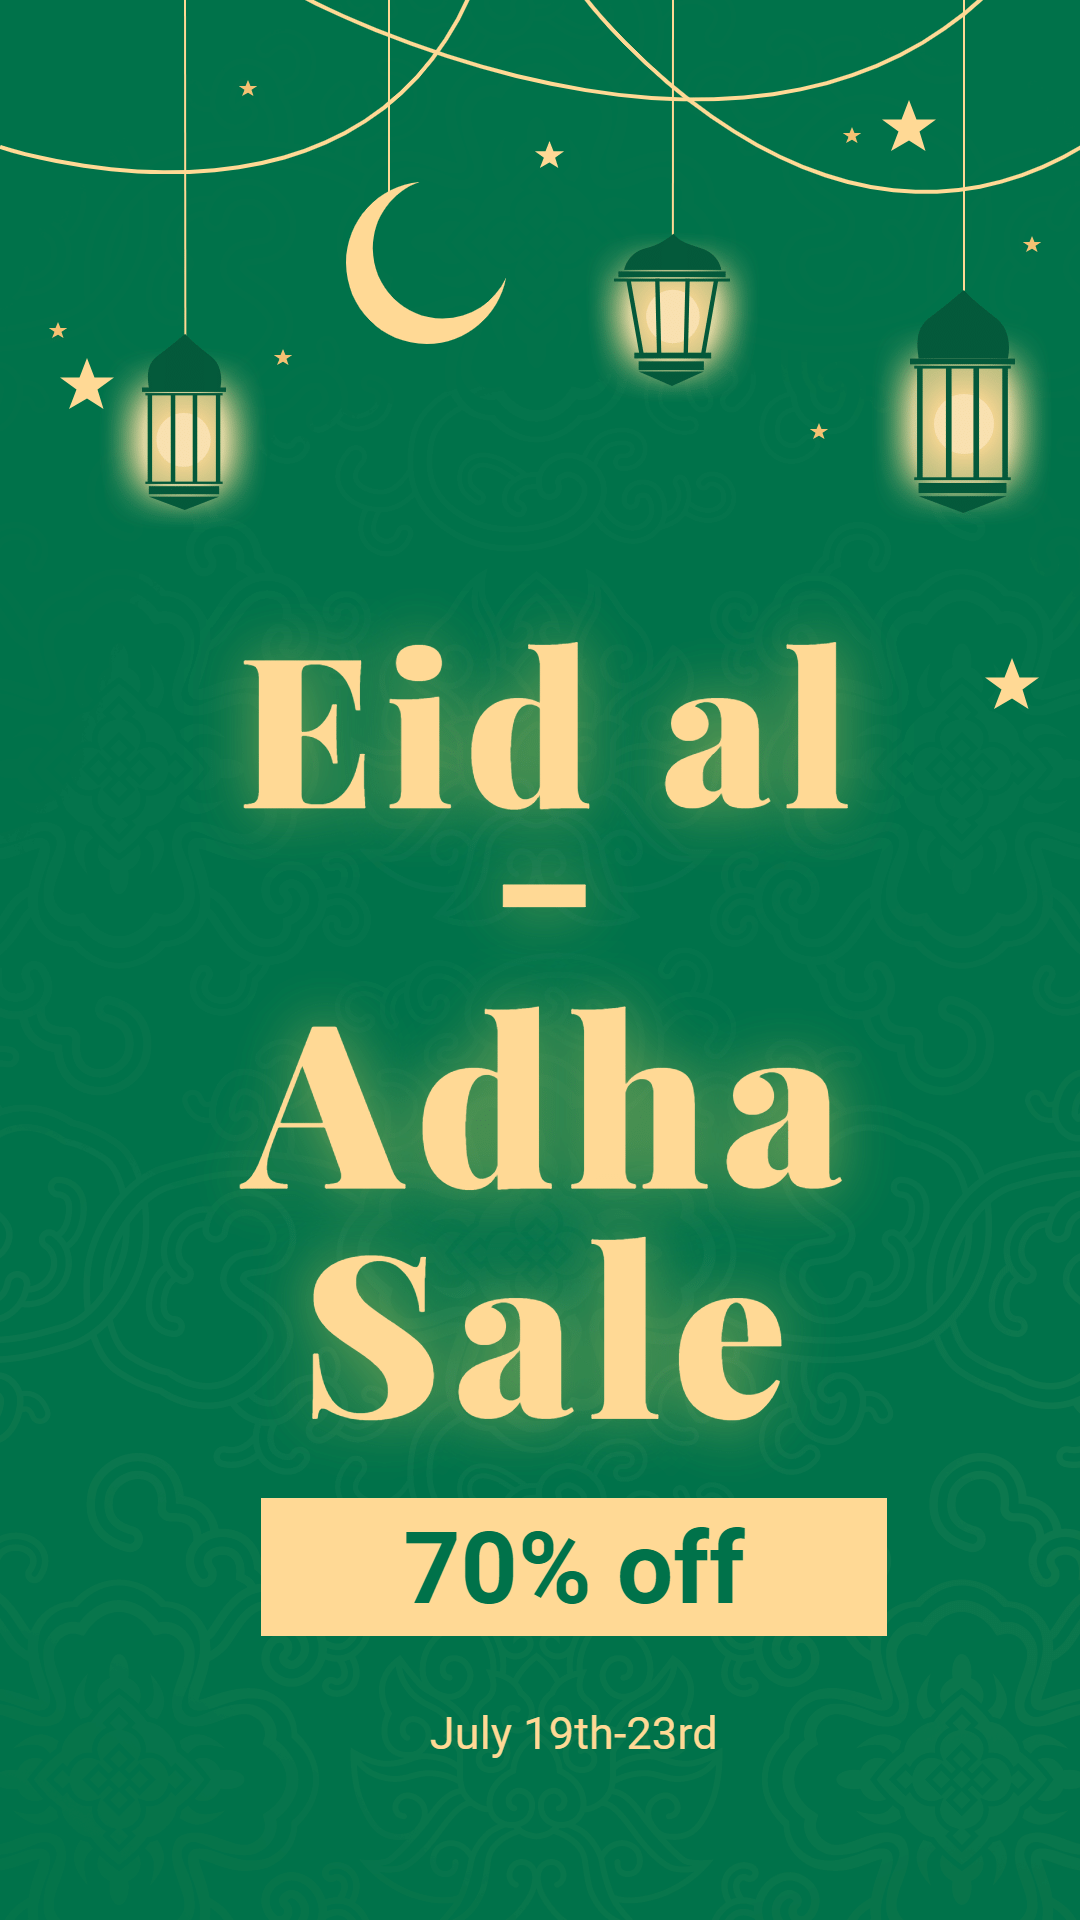 Eid al adha Promotion Ecommerce story